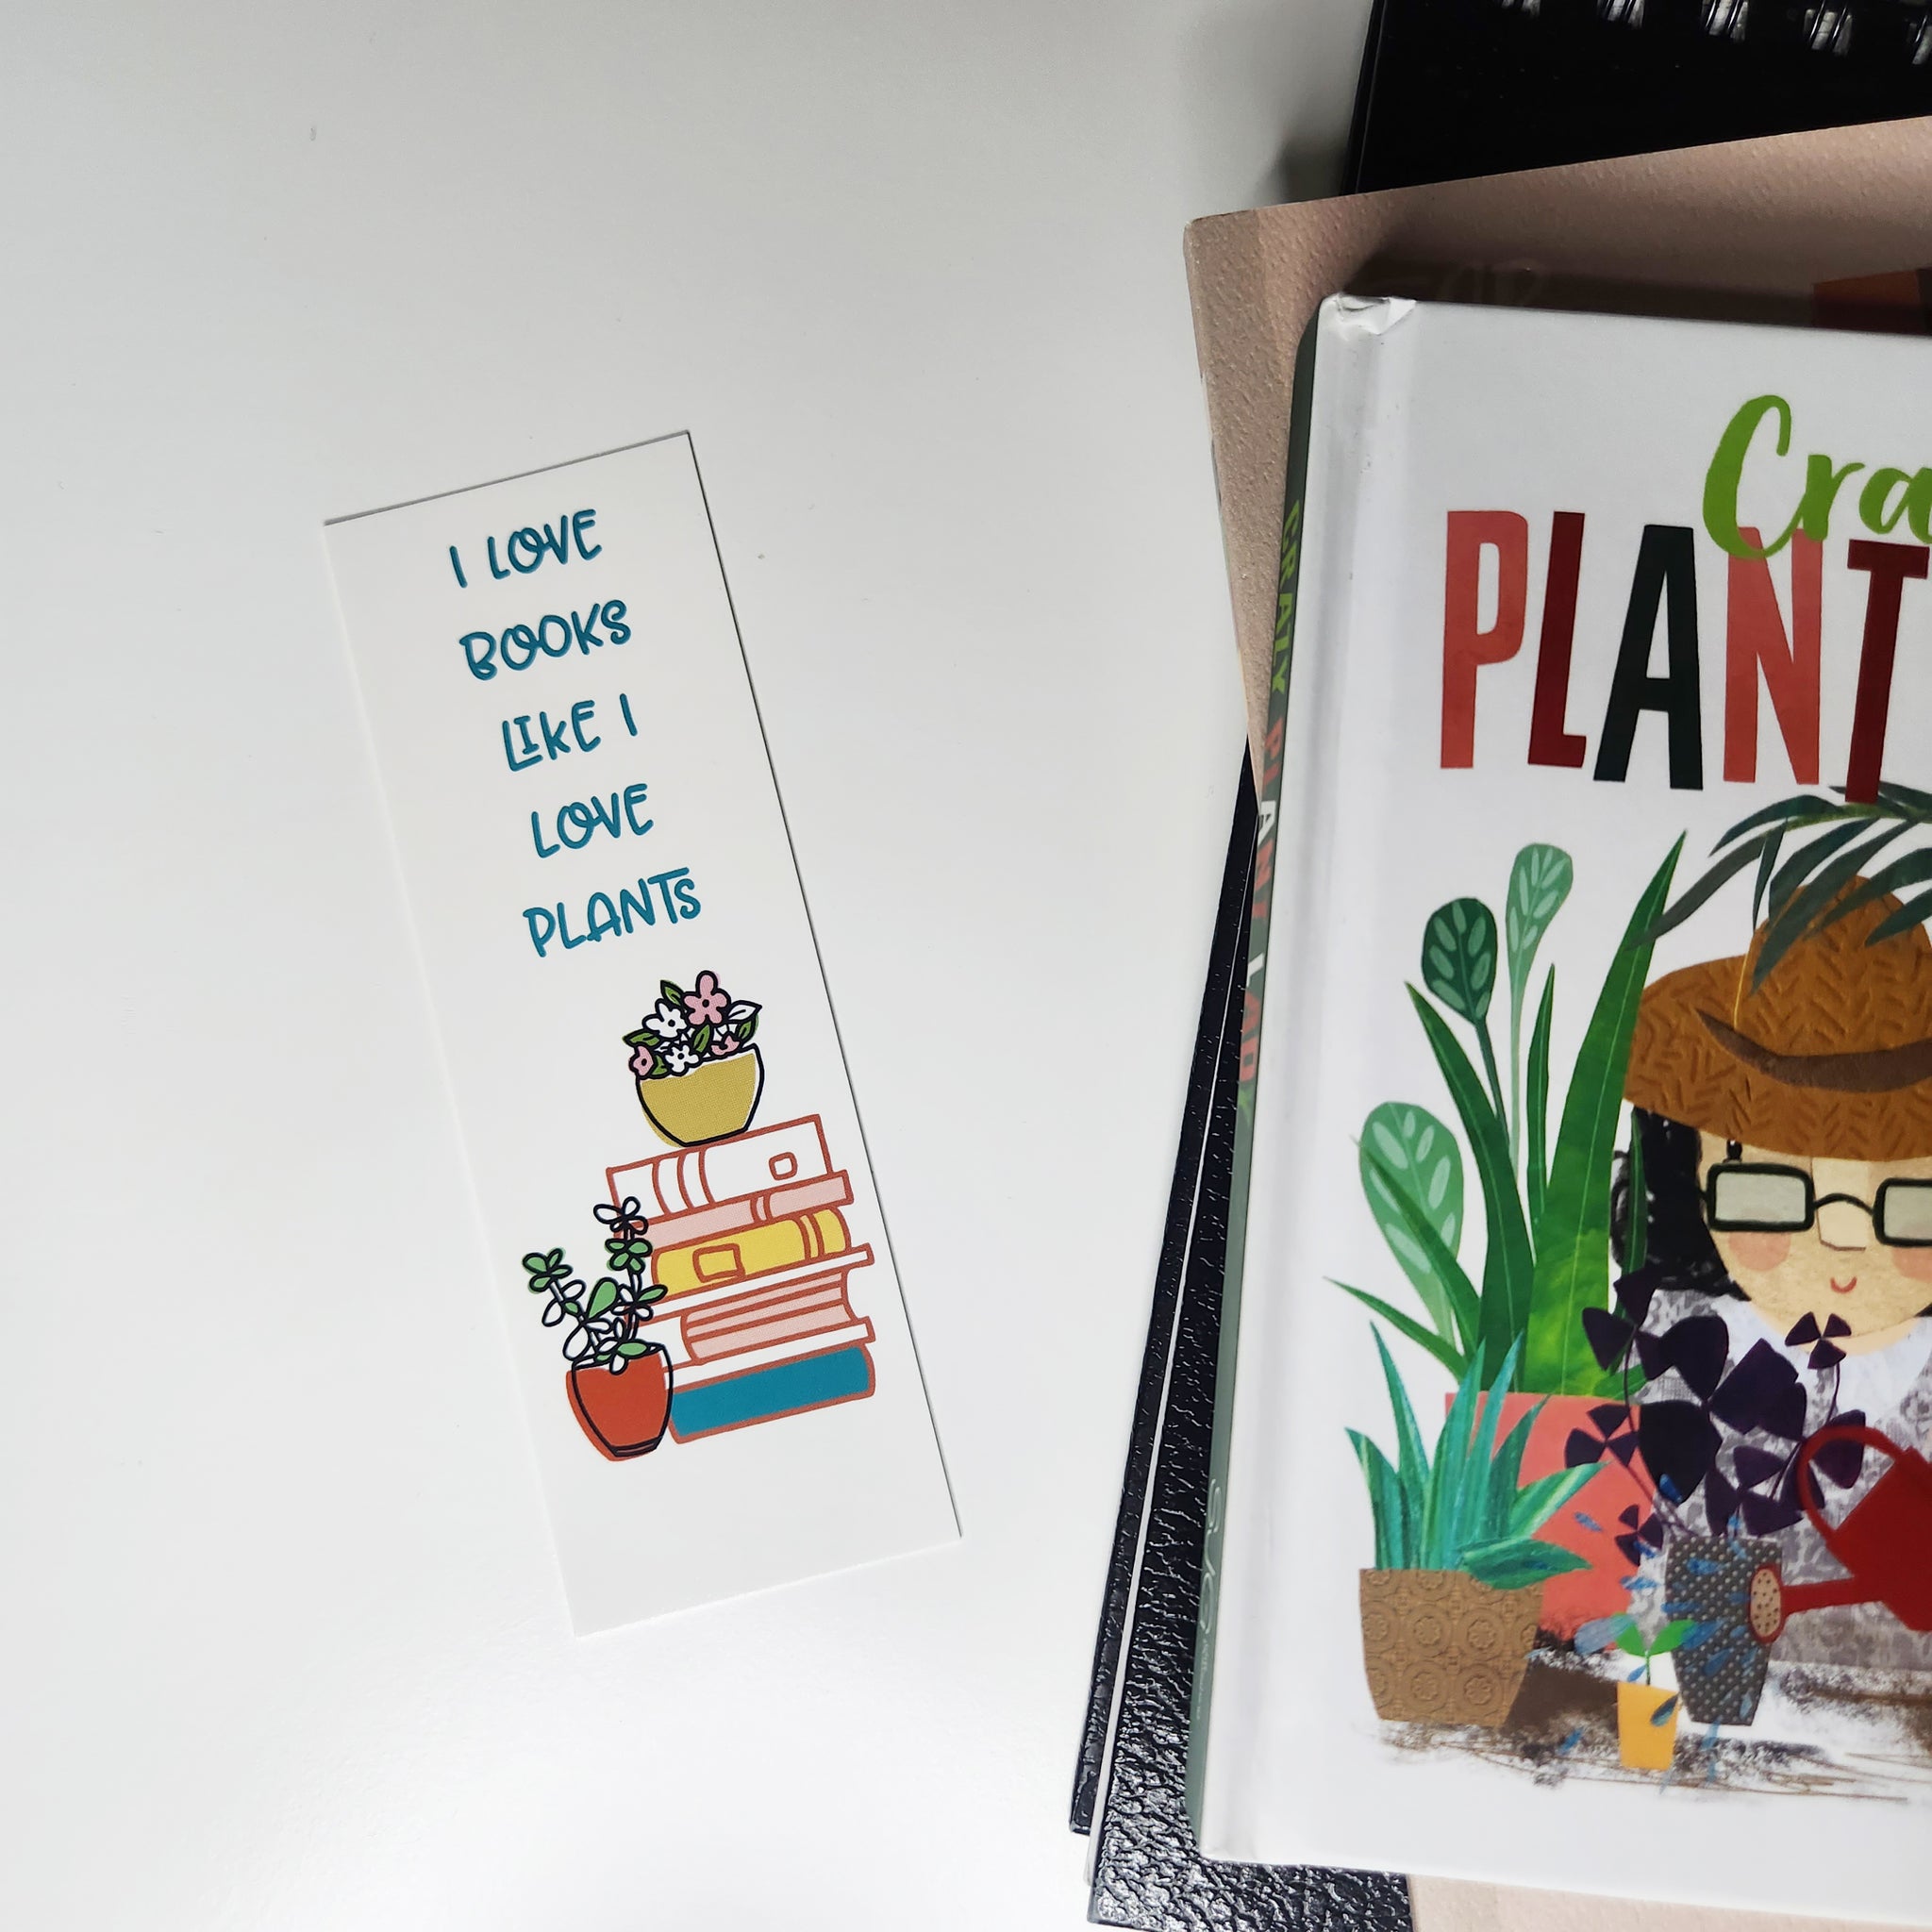 I Love Books Like I Love Plants Bookmark